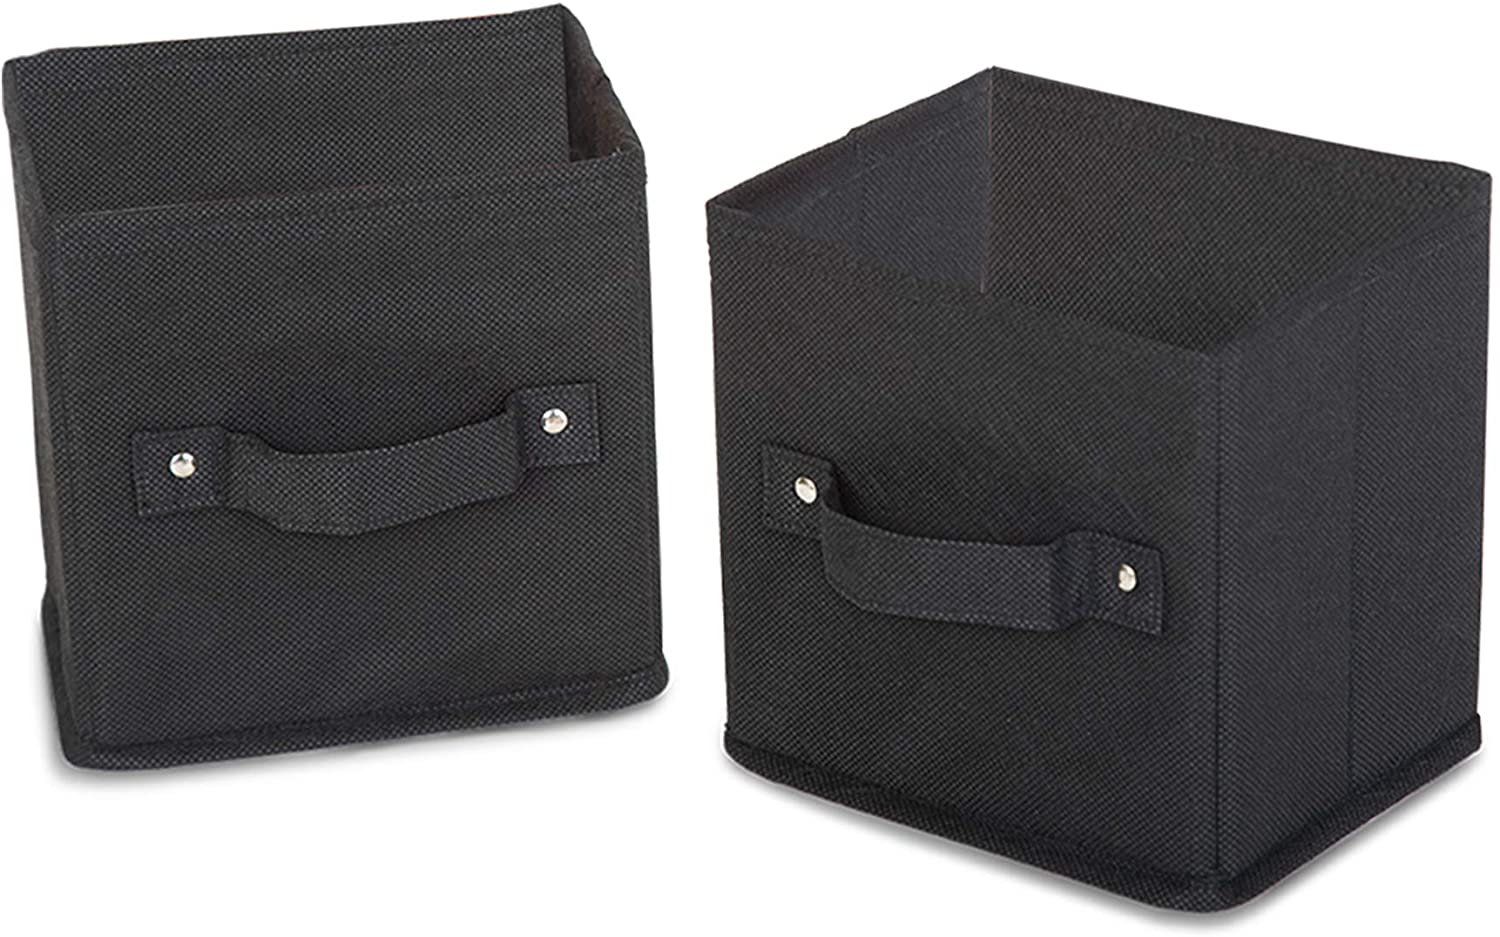 Mini Cube Organizer - 5.75 x 7 x 7 Inch - Black - Smart Design® 2